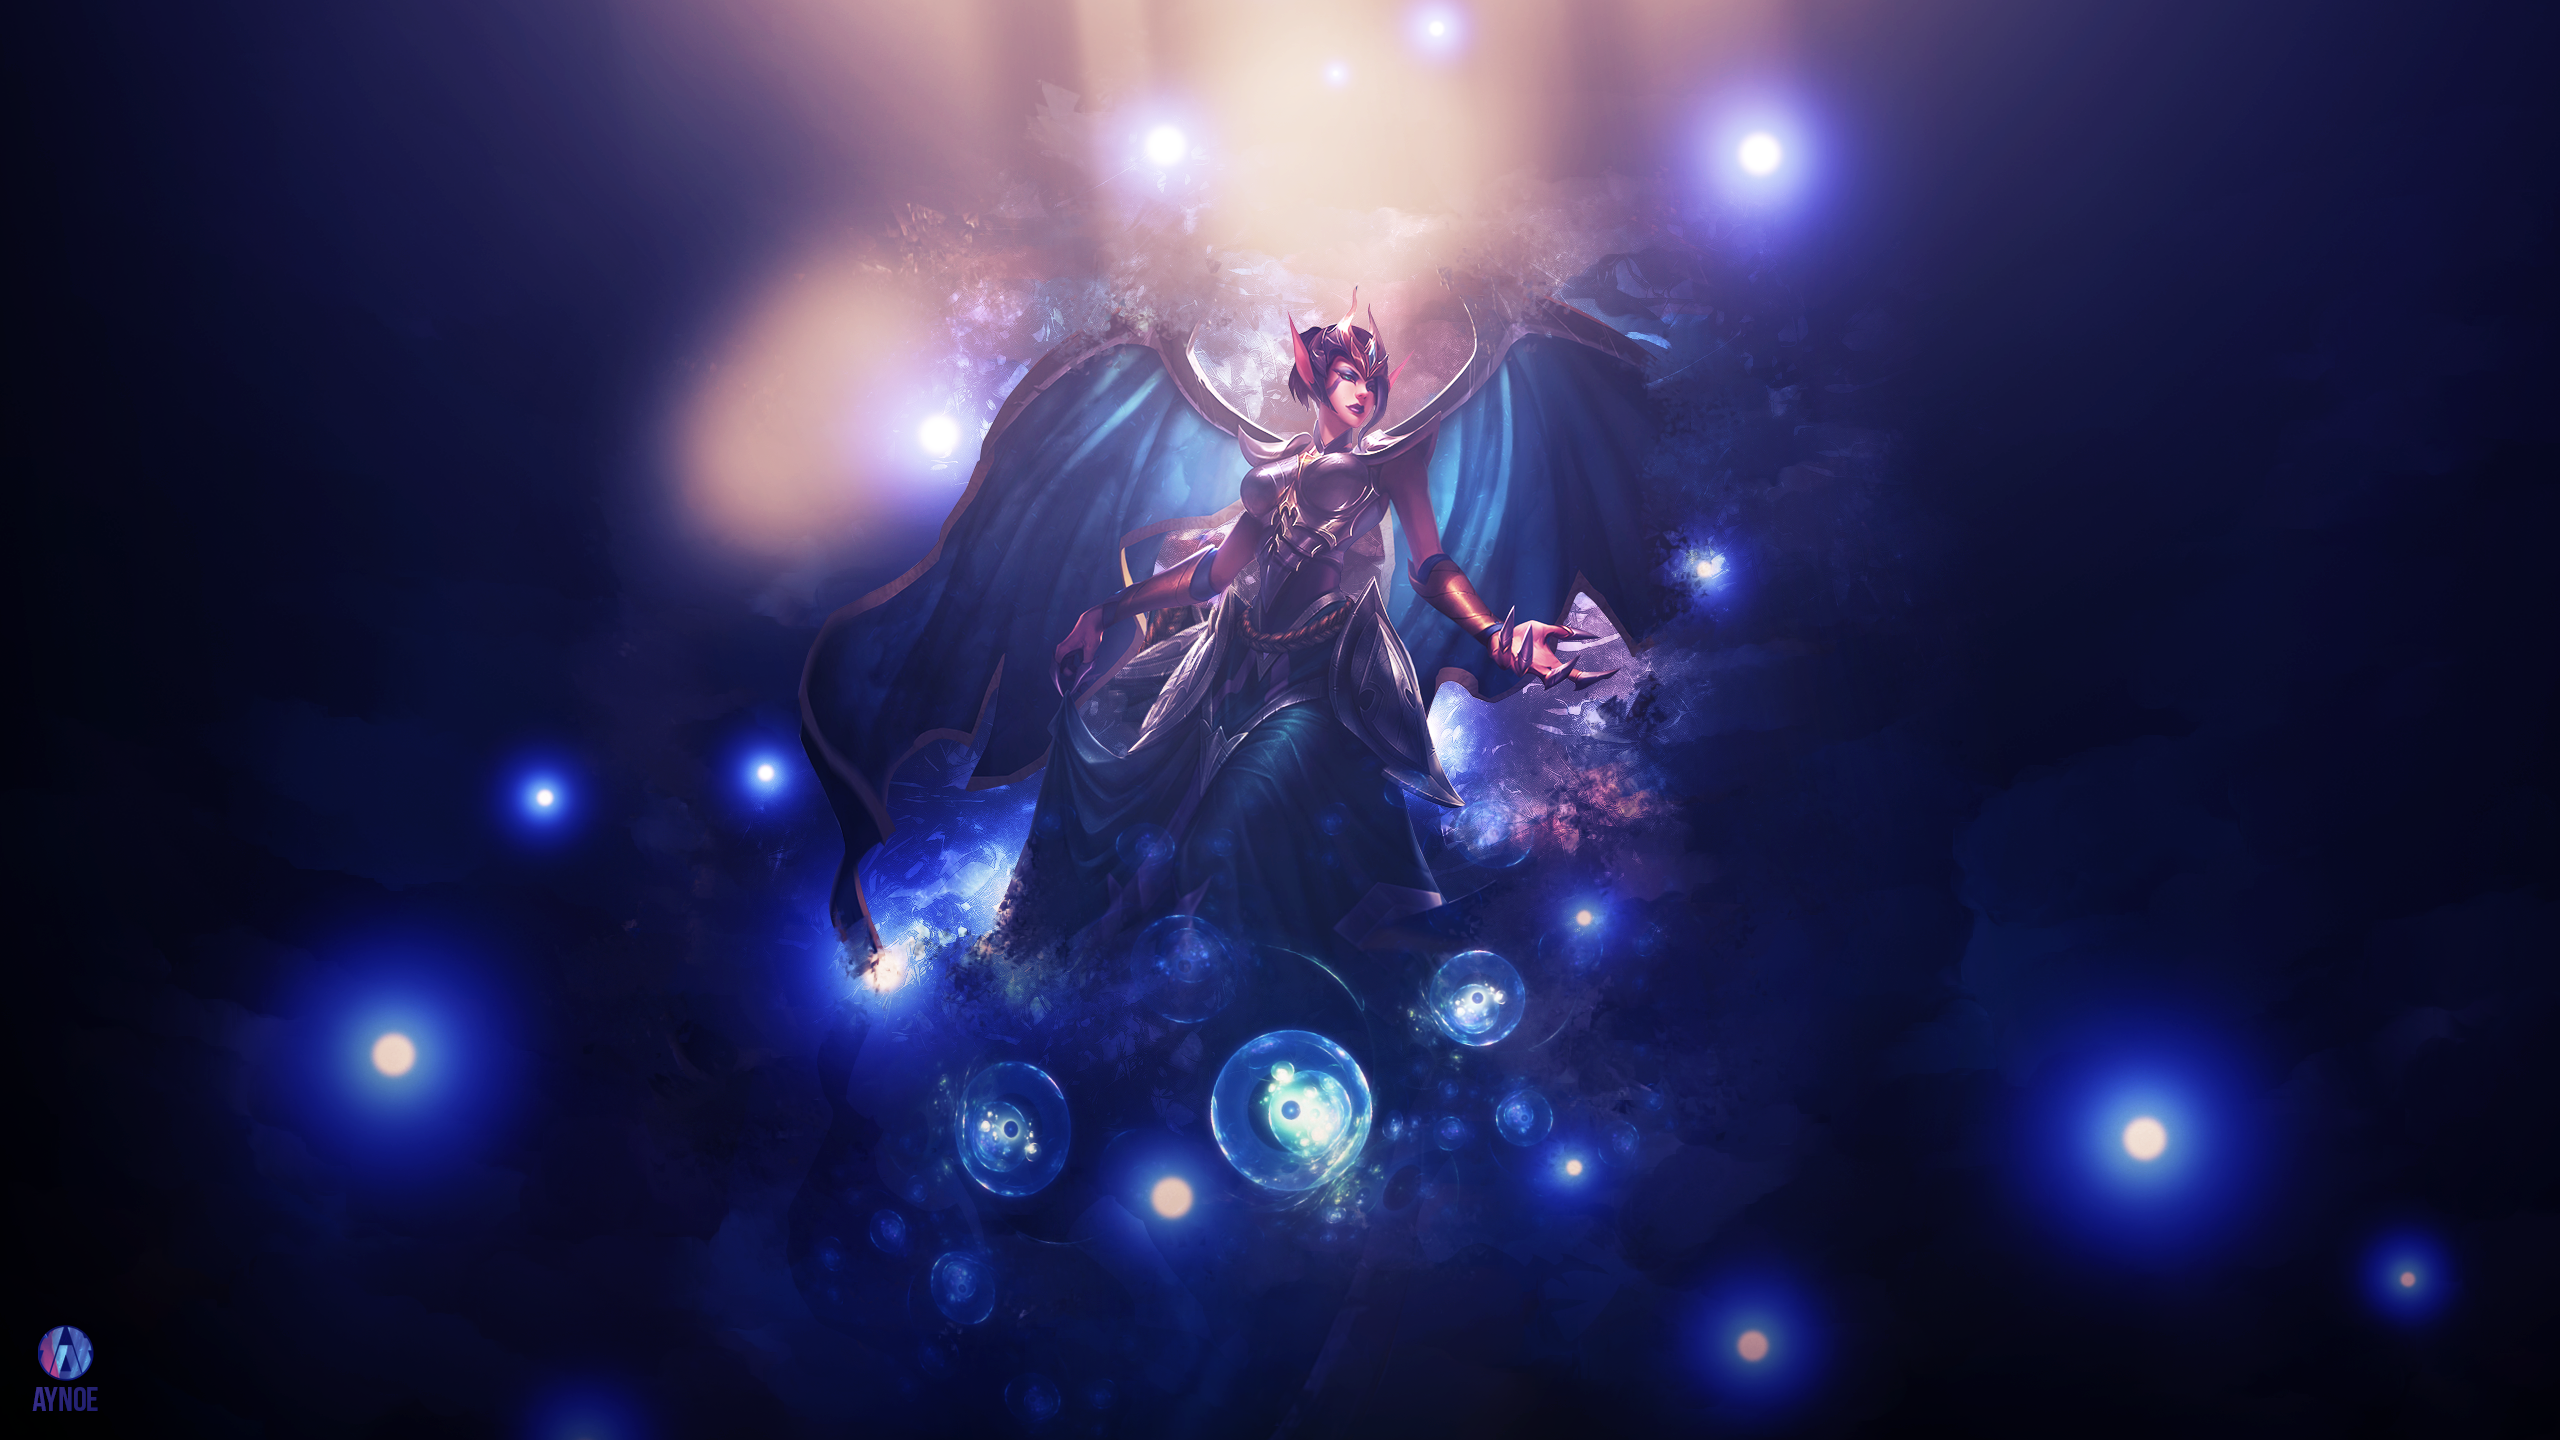 Morgana ~ League of legends - Wallpaper by Aynoe on DeviantArt